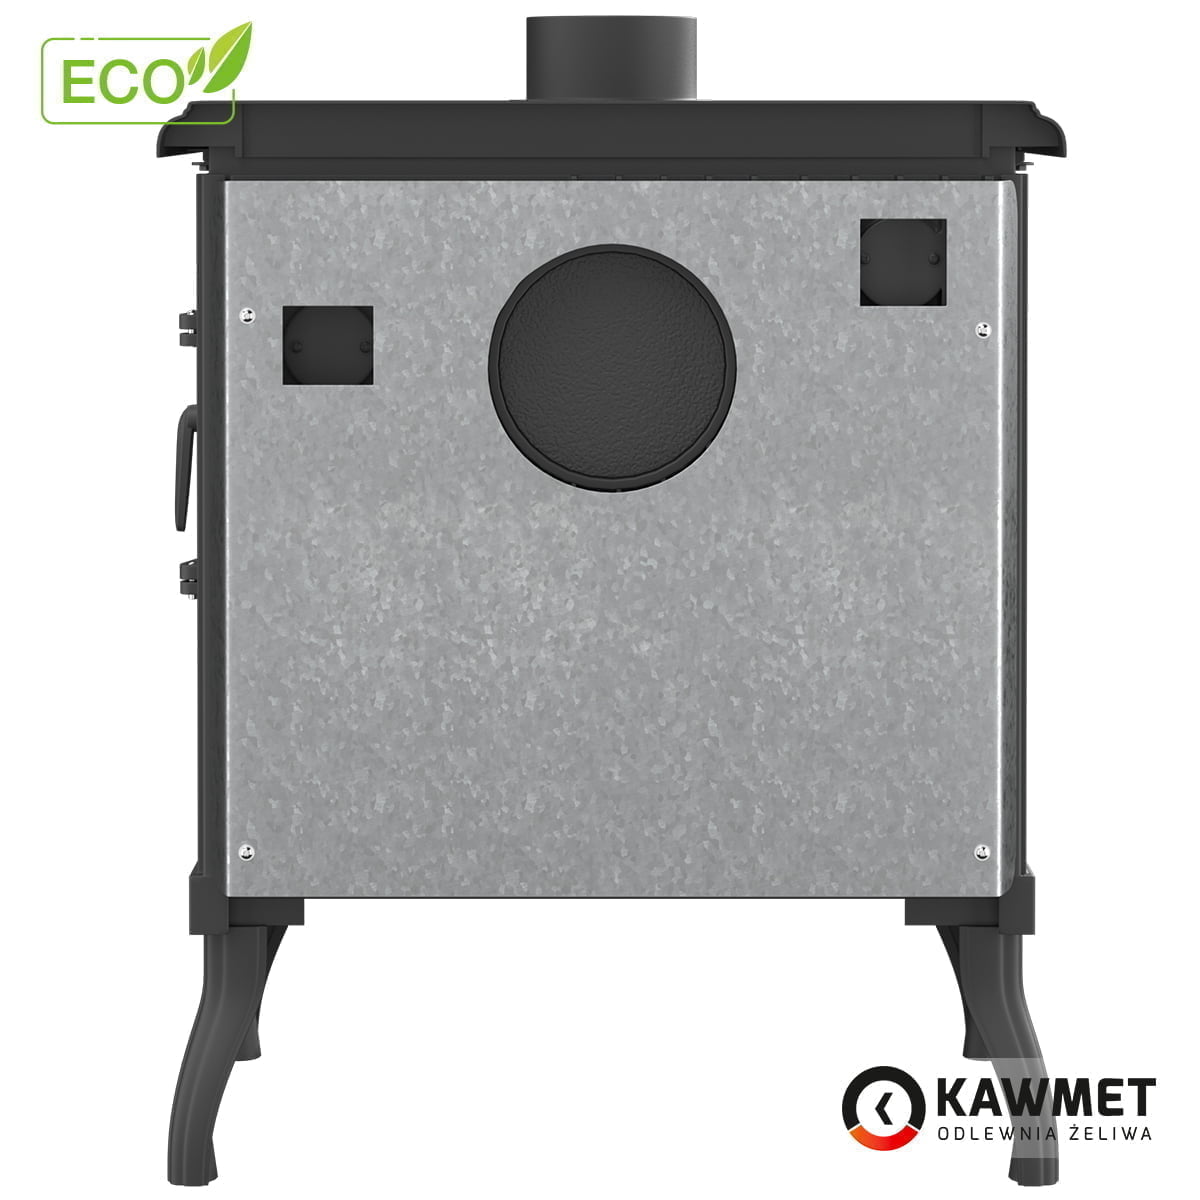 Wood burning stove KAWMET Premium EOS S13 ECO (7)